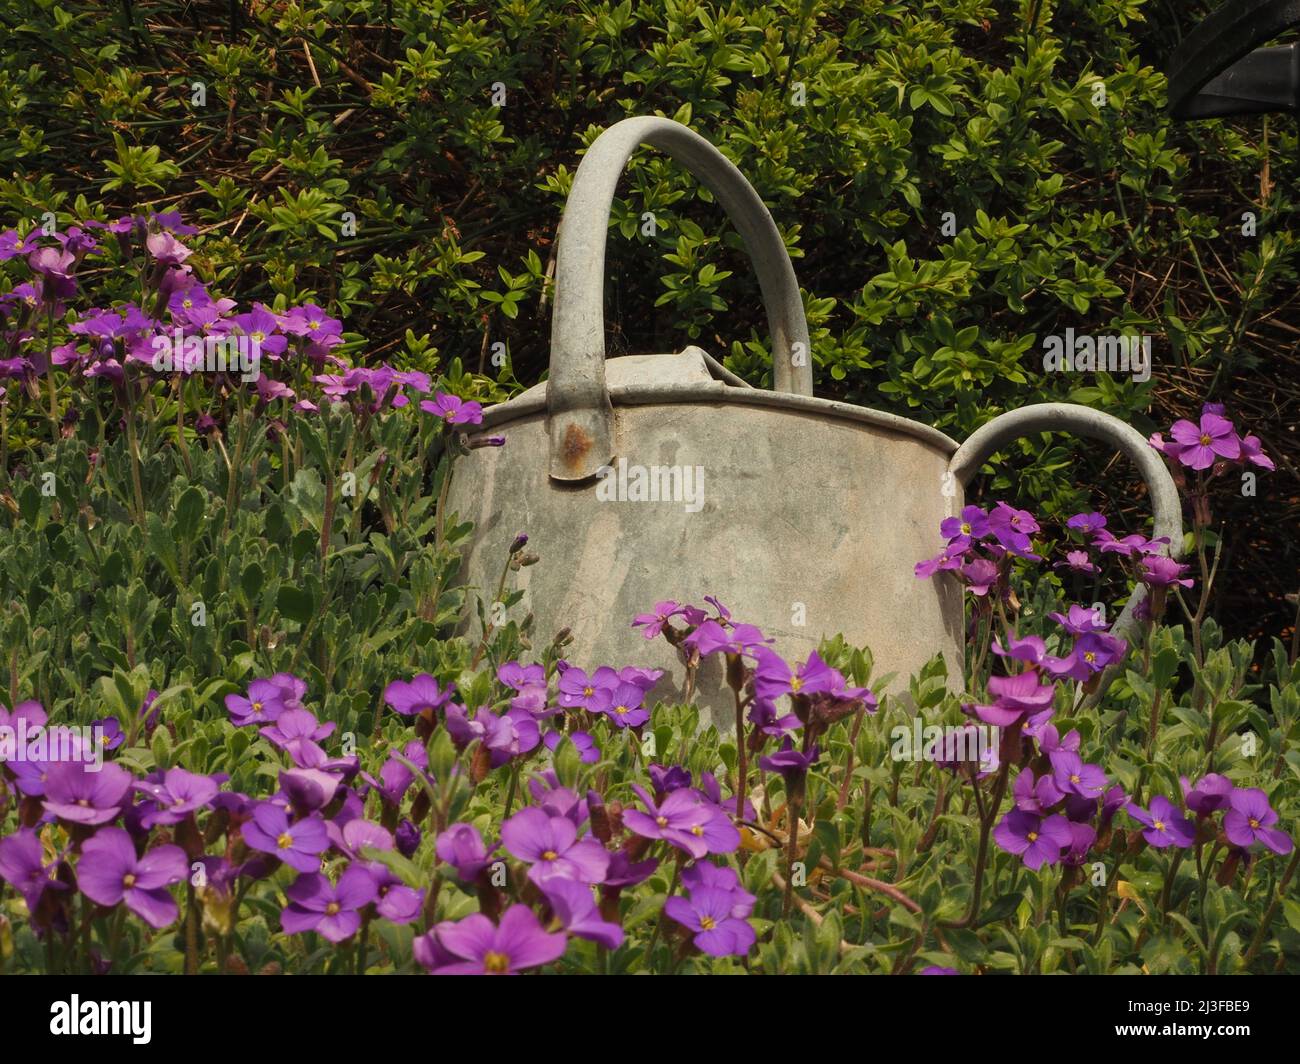 Purple Aubrieta (Rock Cress) and galvanized watering can in garden setting Stock Photo